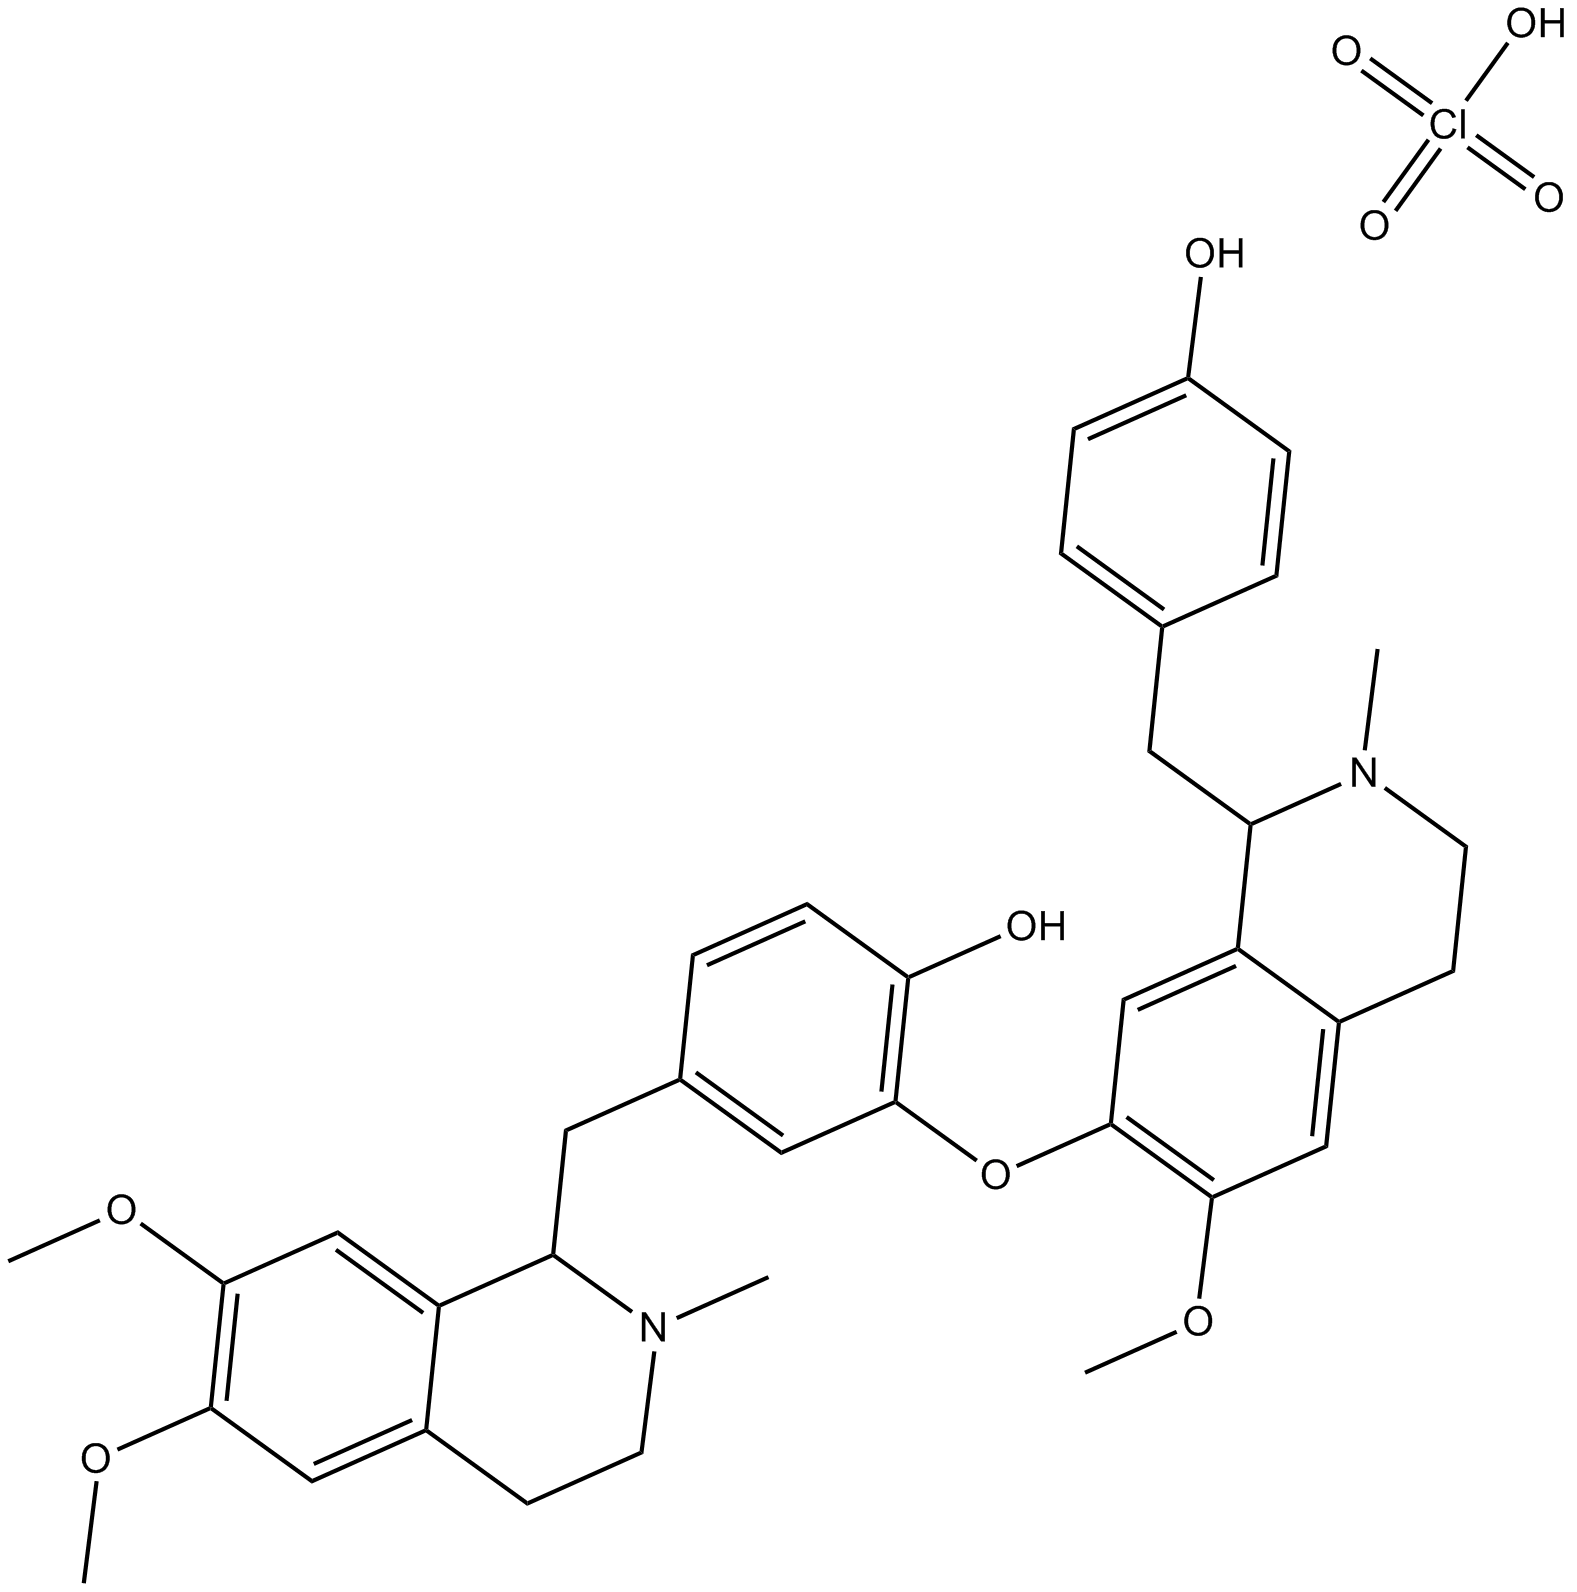 Liensinine Perchlorate  Chemical Structure